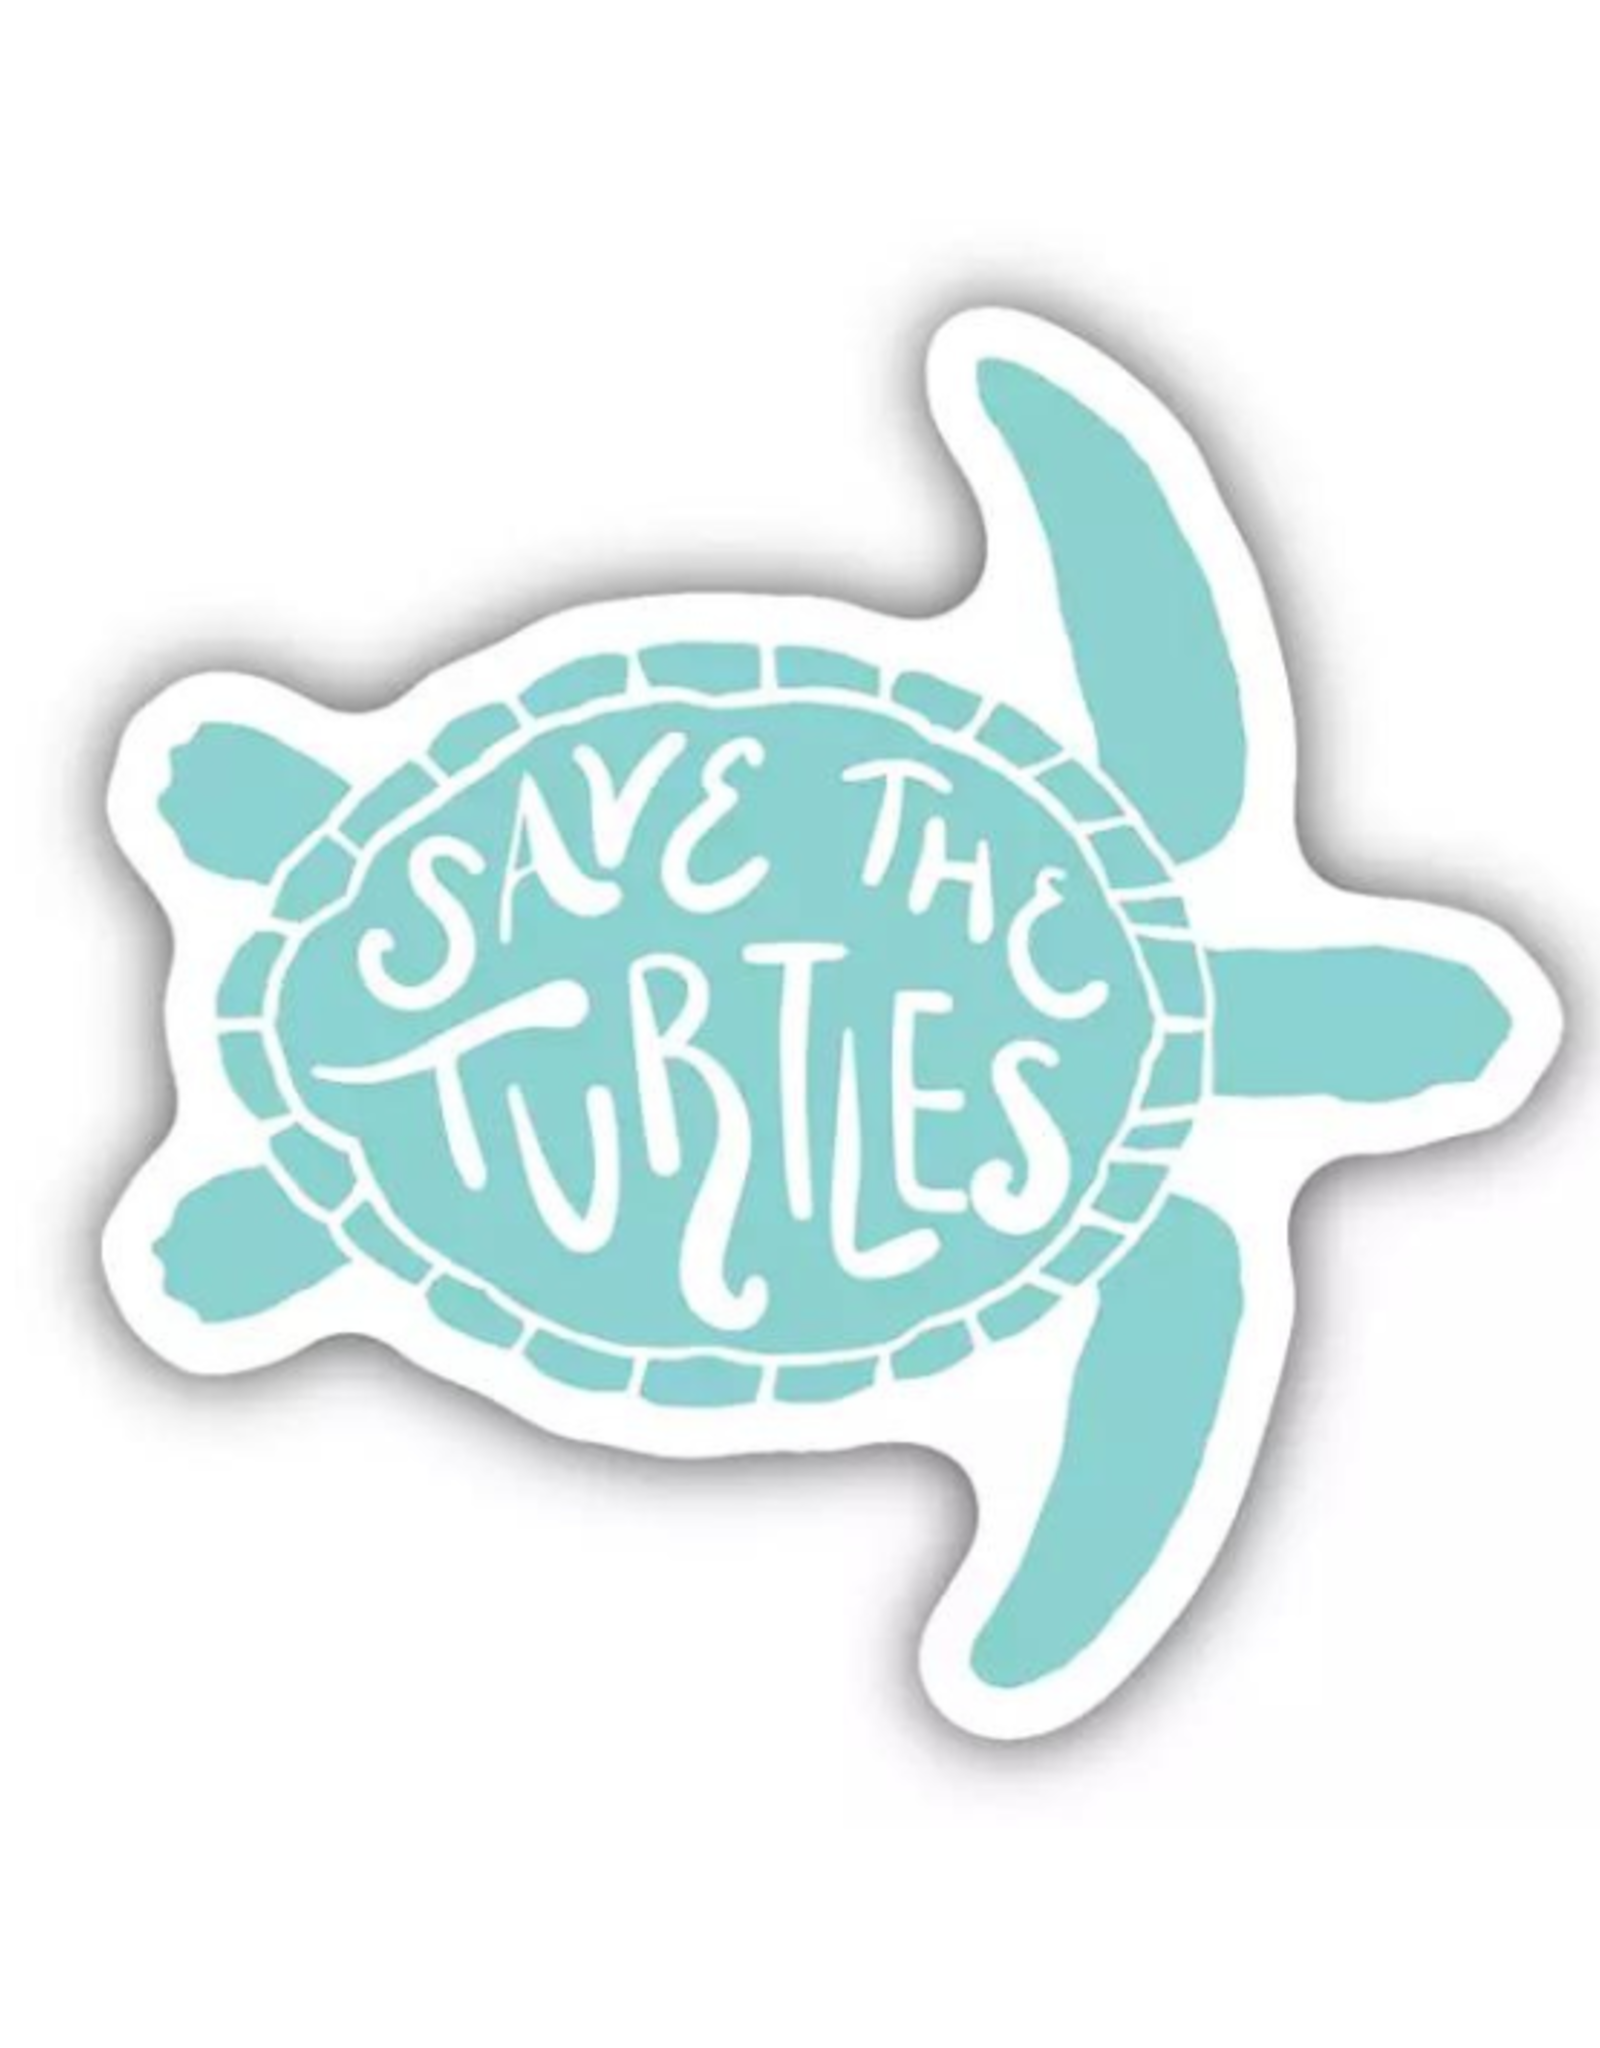 Stickers Northwest Inc. Stickers Northwest Inc. - Save the Turtles Sticker